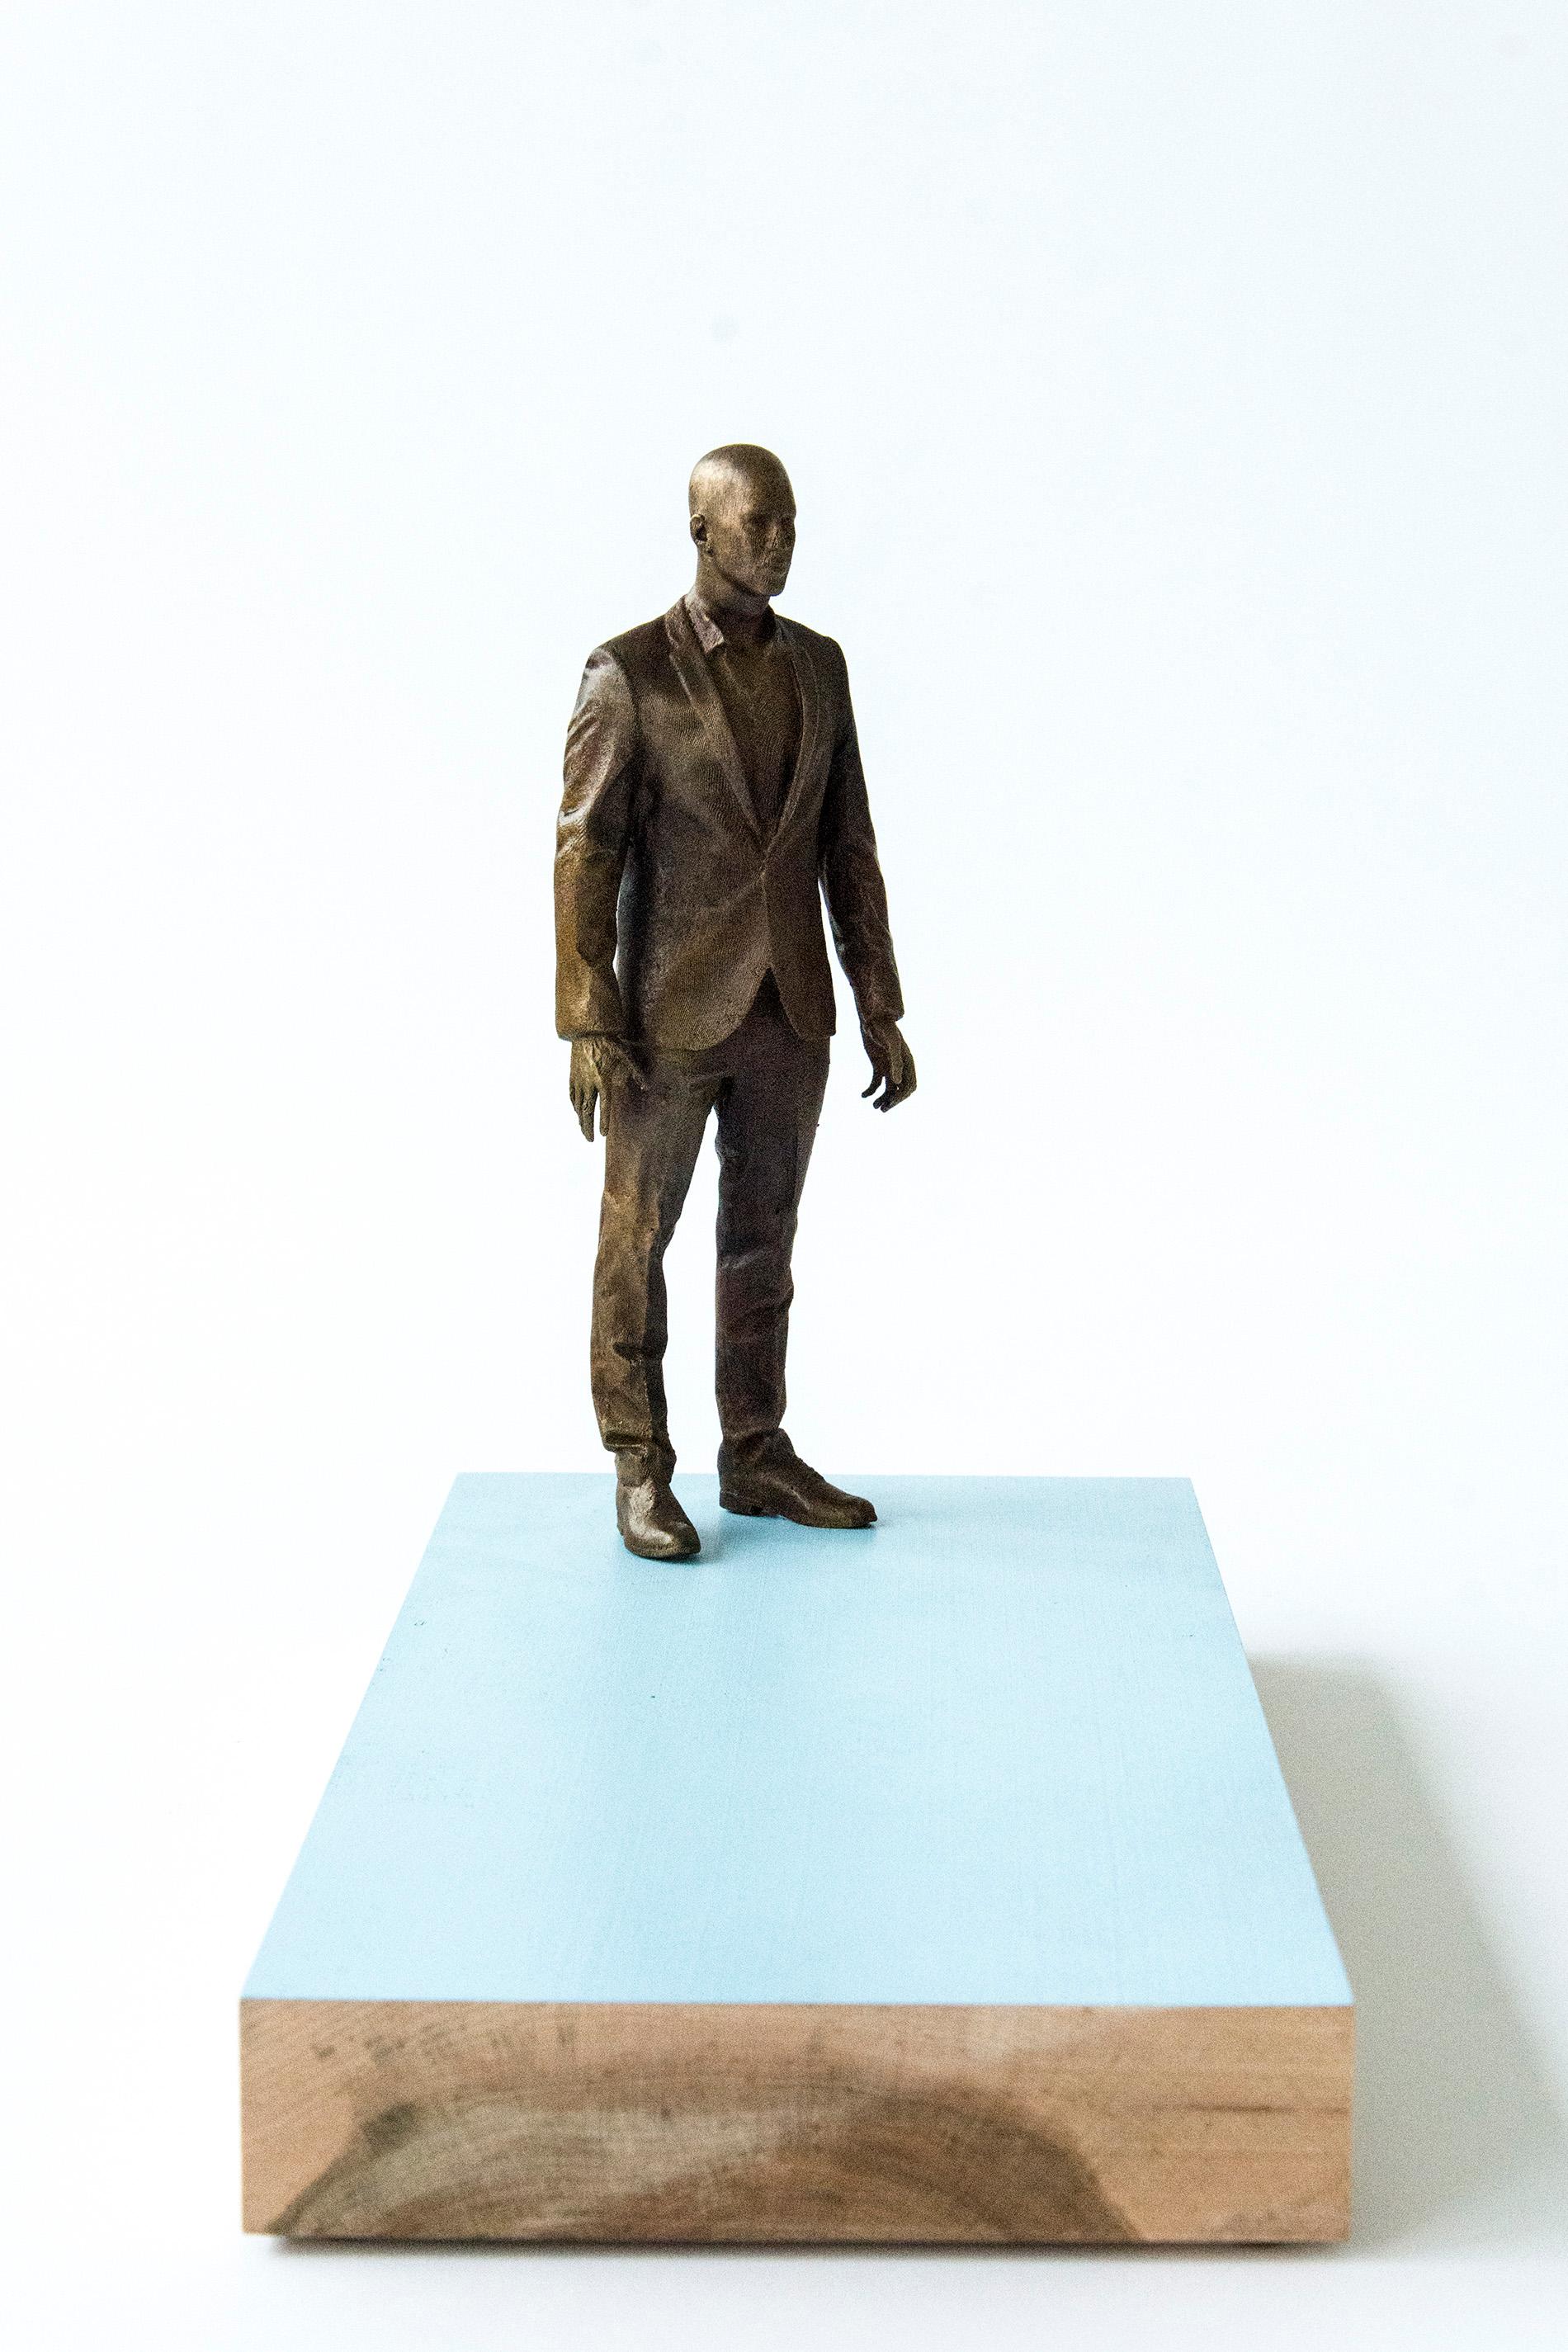 Roch Smith Figurative Sculpture - Ponder - small, narrative, figurative, male bronze sculpture on wood base